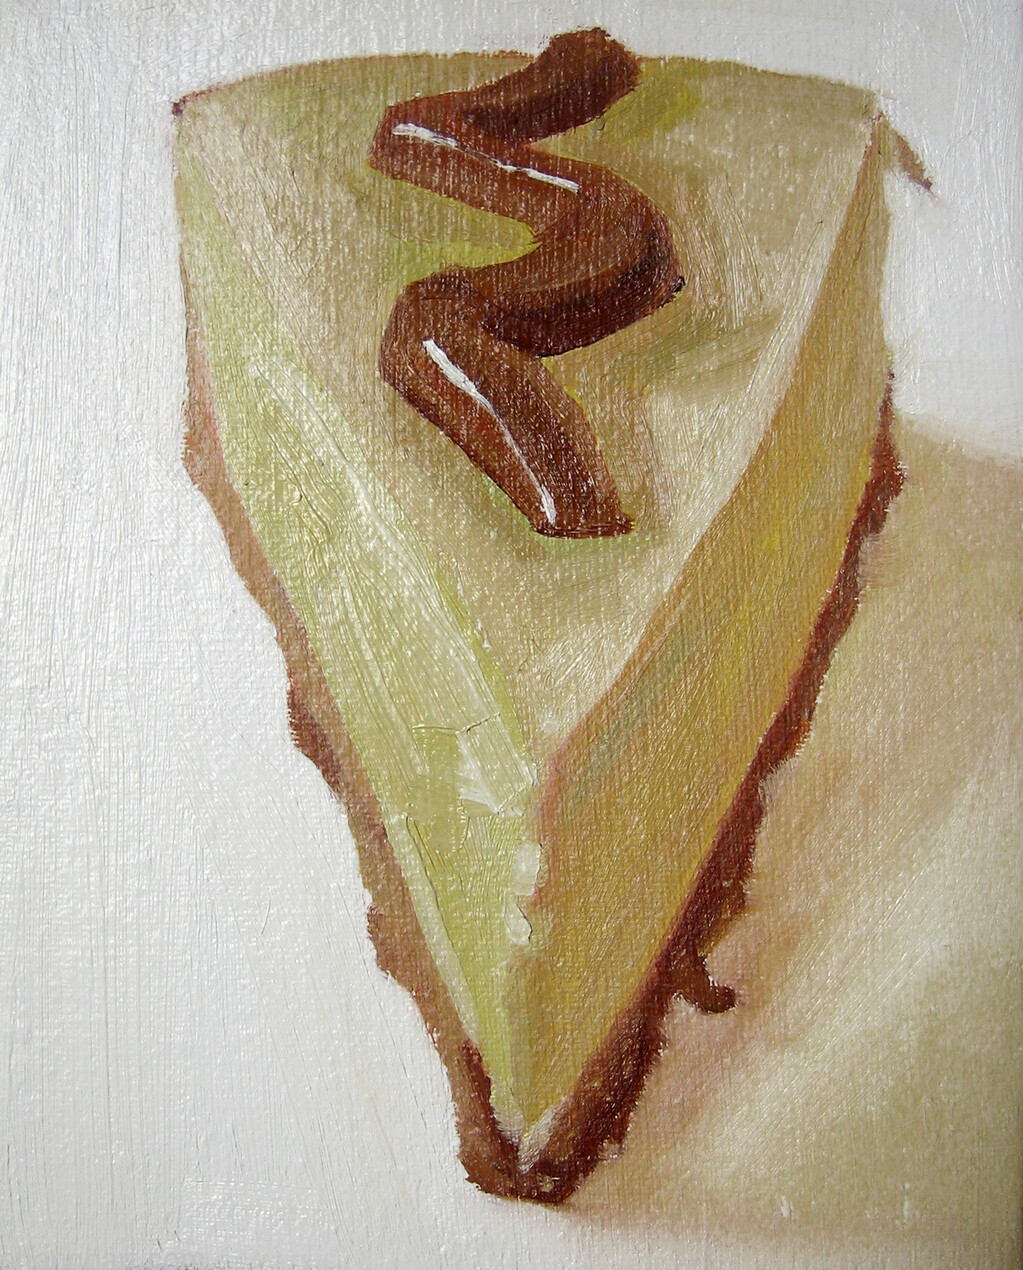 2008, 20x16cm, oil on canvas